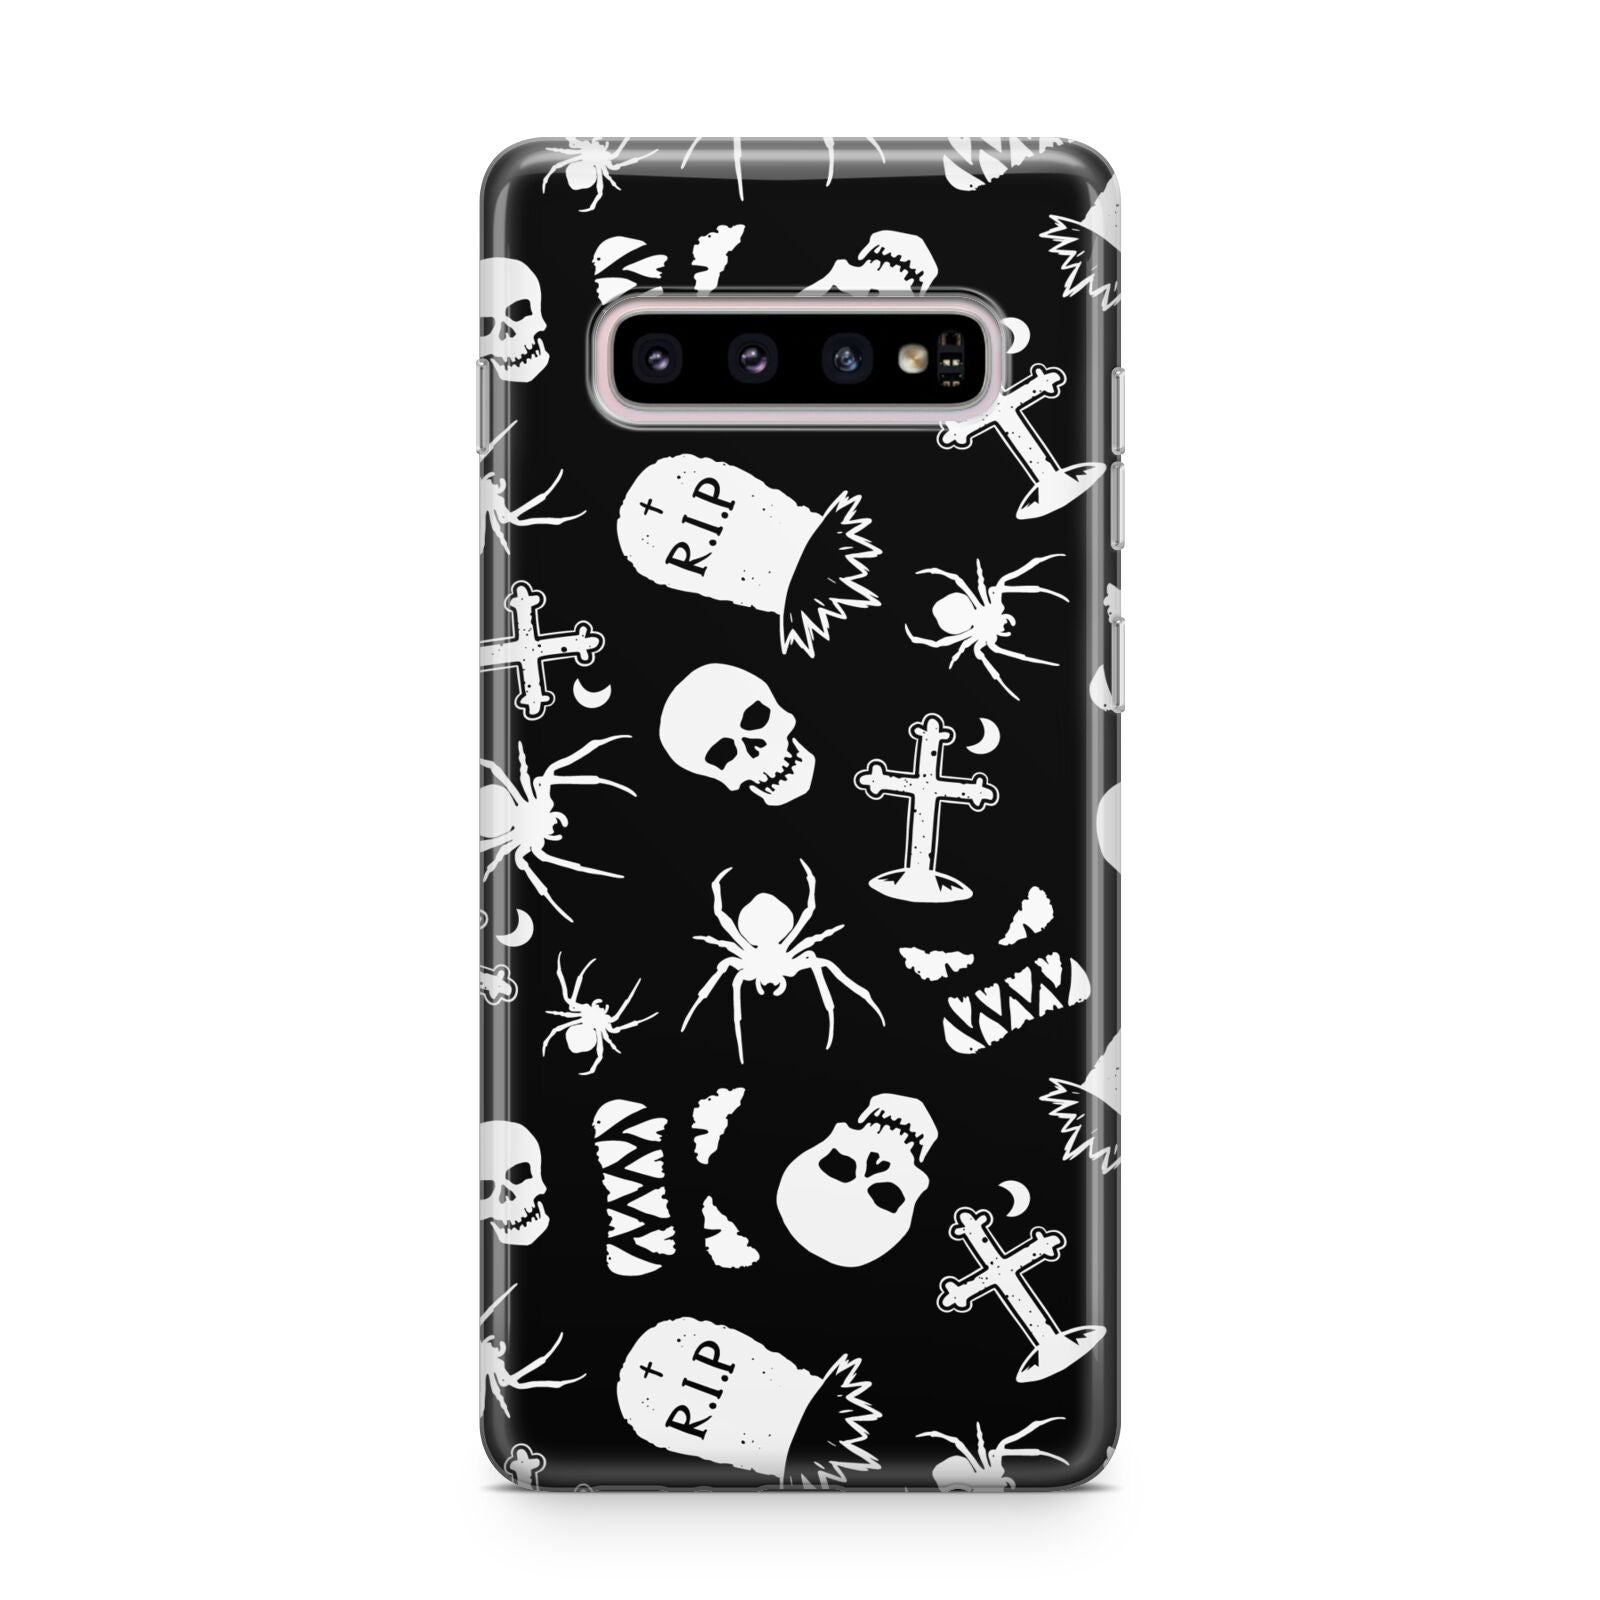 Spooky Illustrations Samsung Galaxy S10 Plus Case